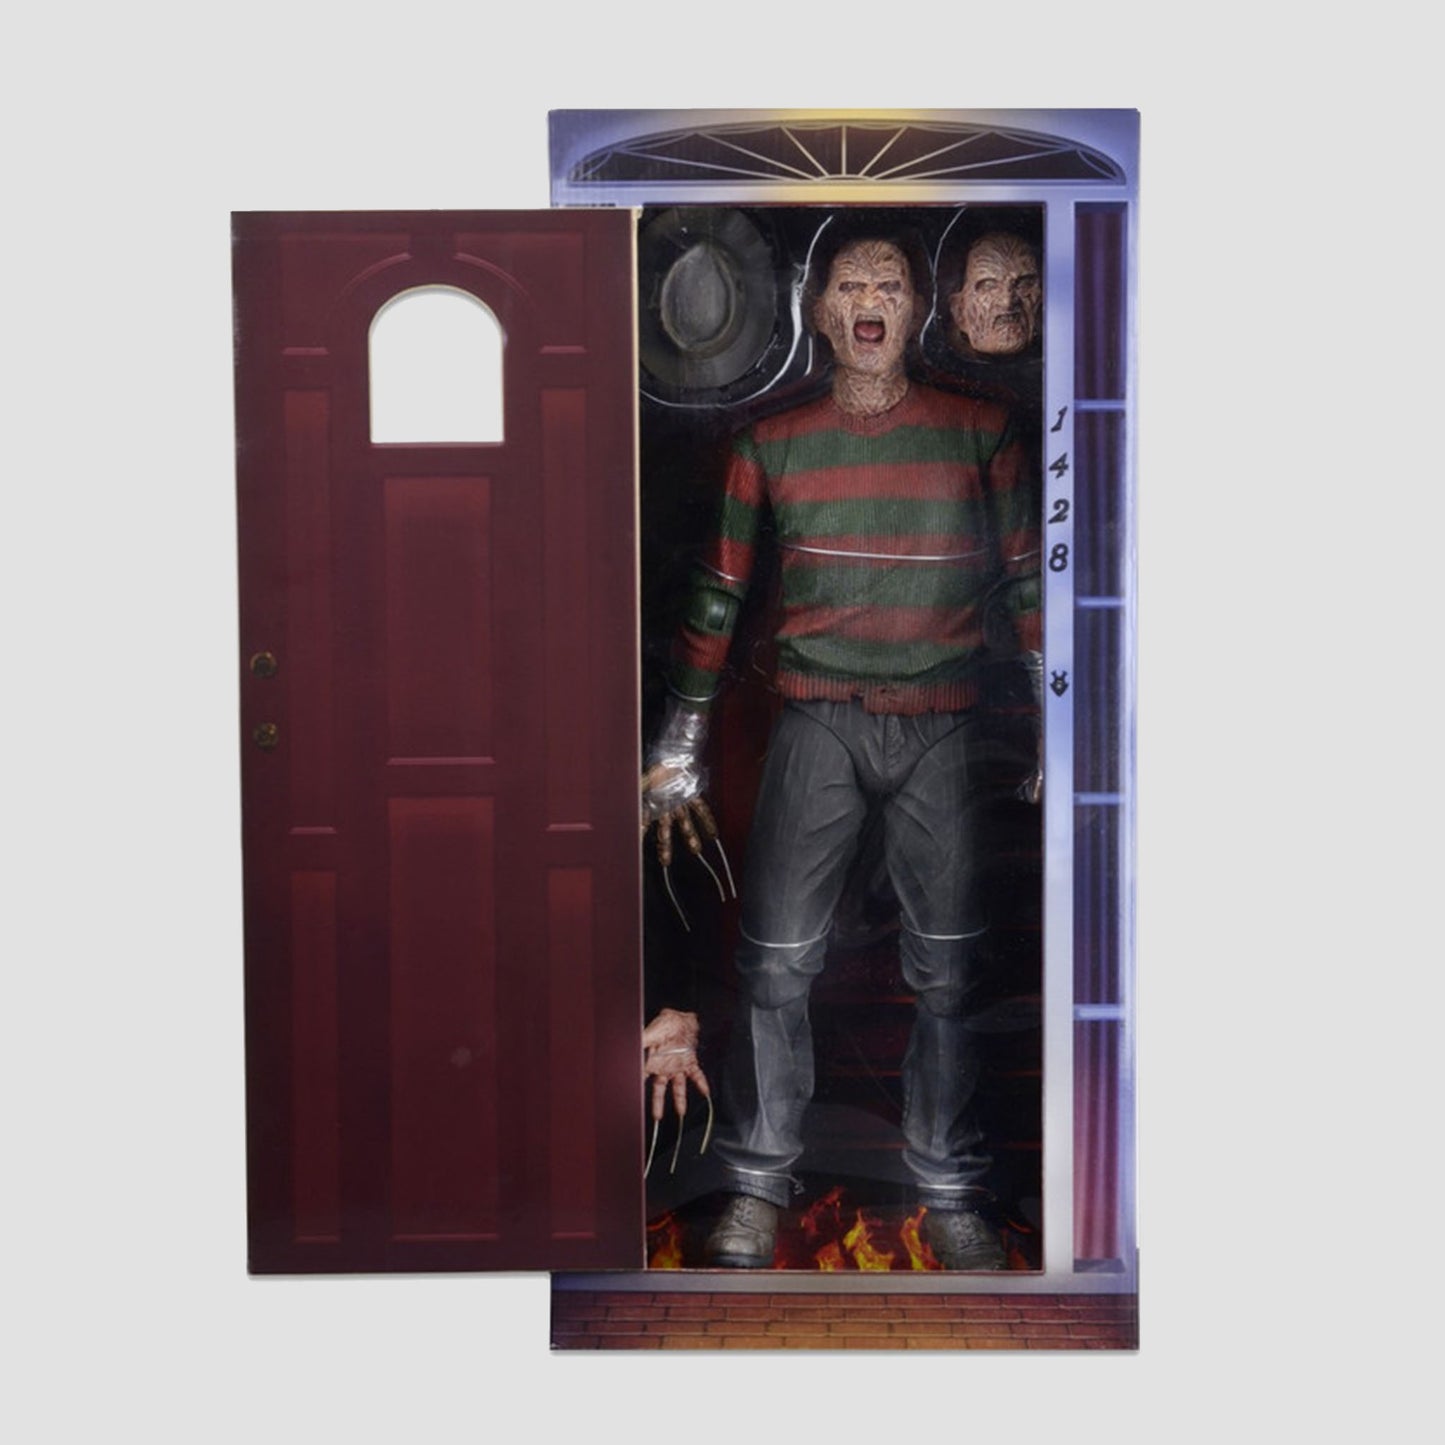 Freddy Krueger (A Nightmare on Elm Street Part 2: Freddy's Revenge) NECA 1:4 Scale Action Figure